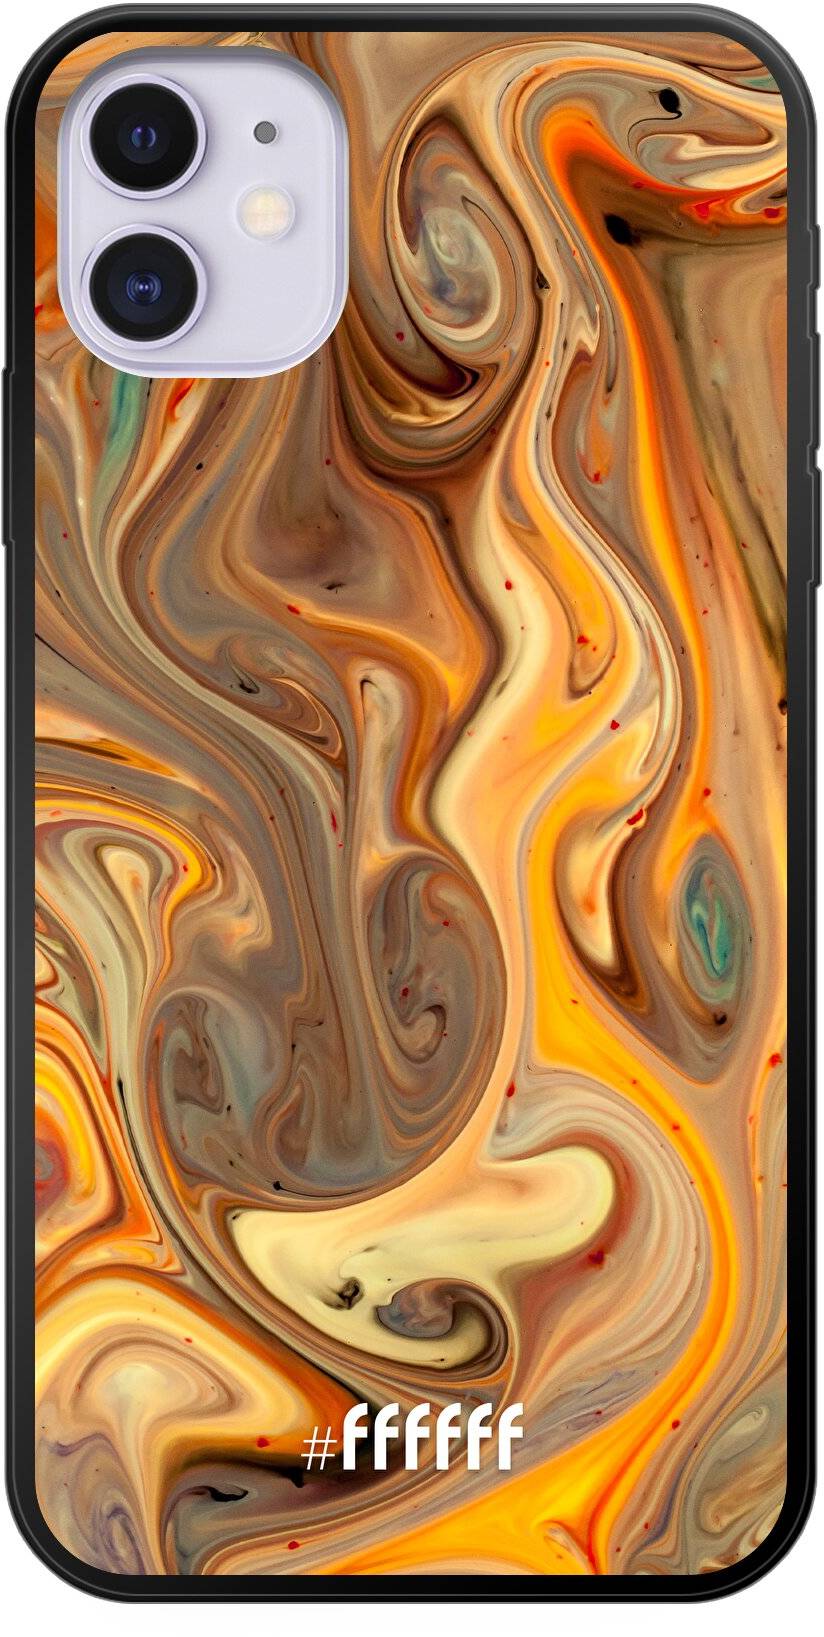 Brownie Caramel iPhone 11